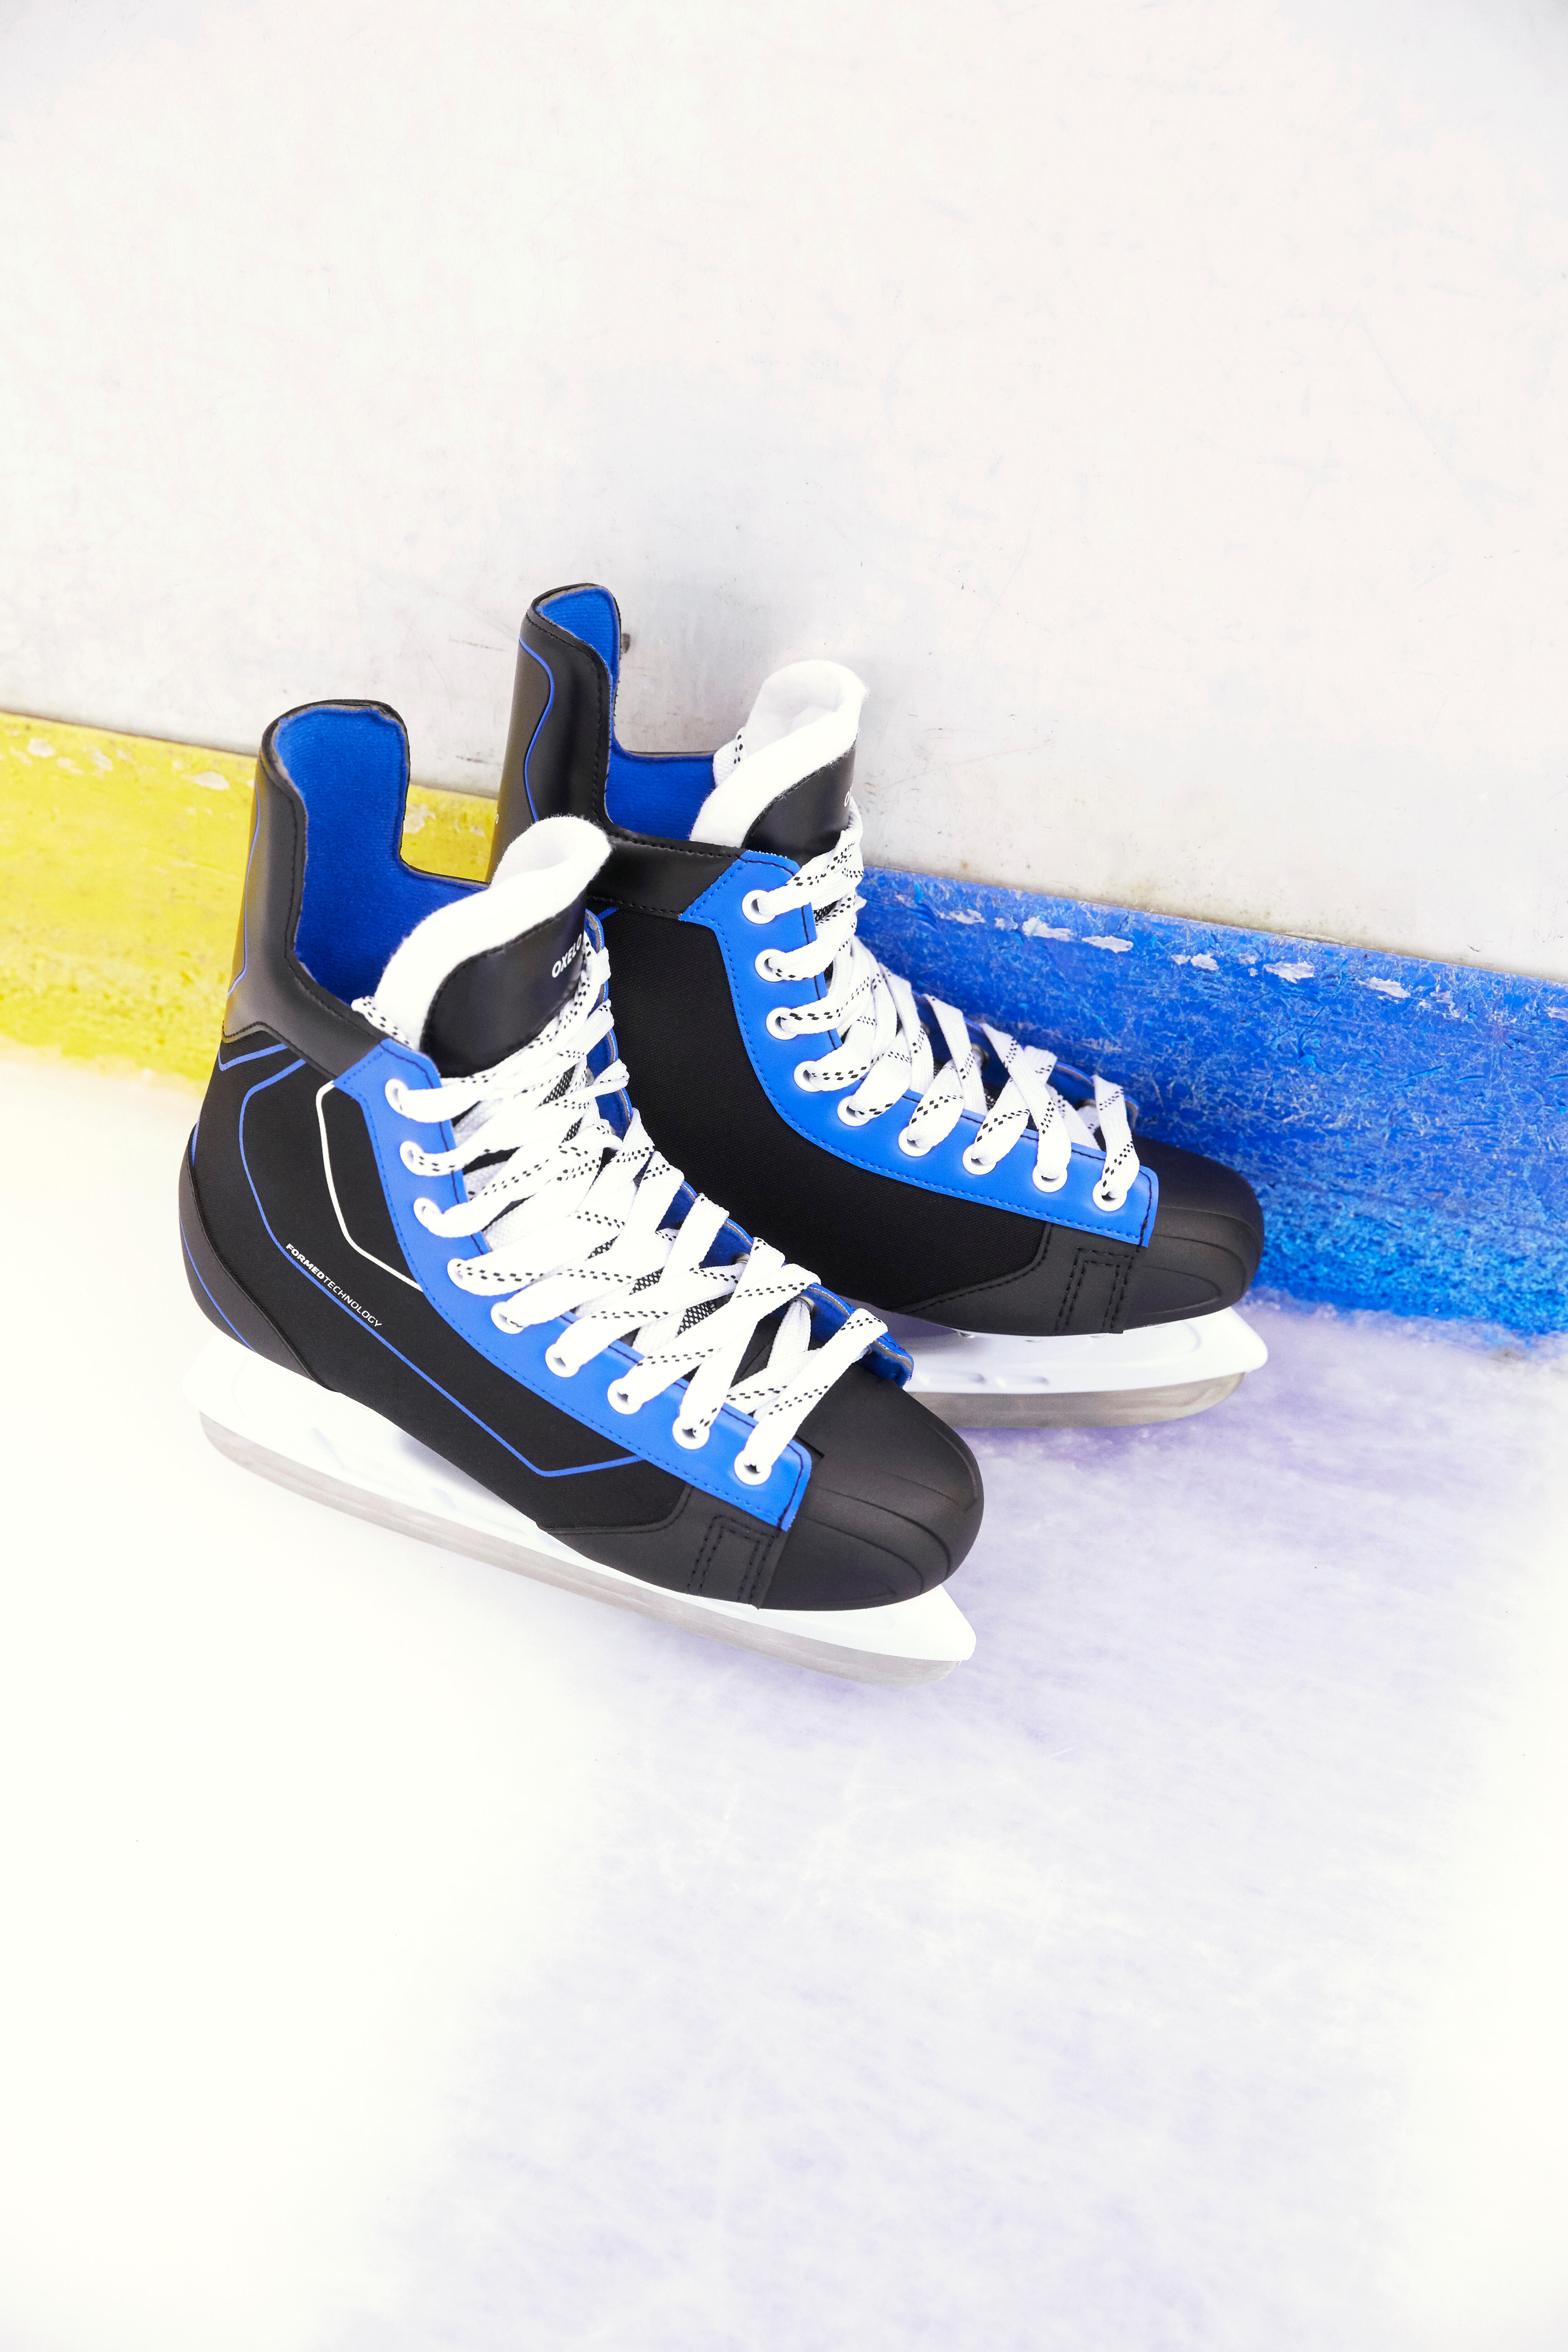 Hockey Skates - IH 100 SR Blue - OROKS